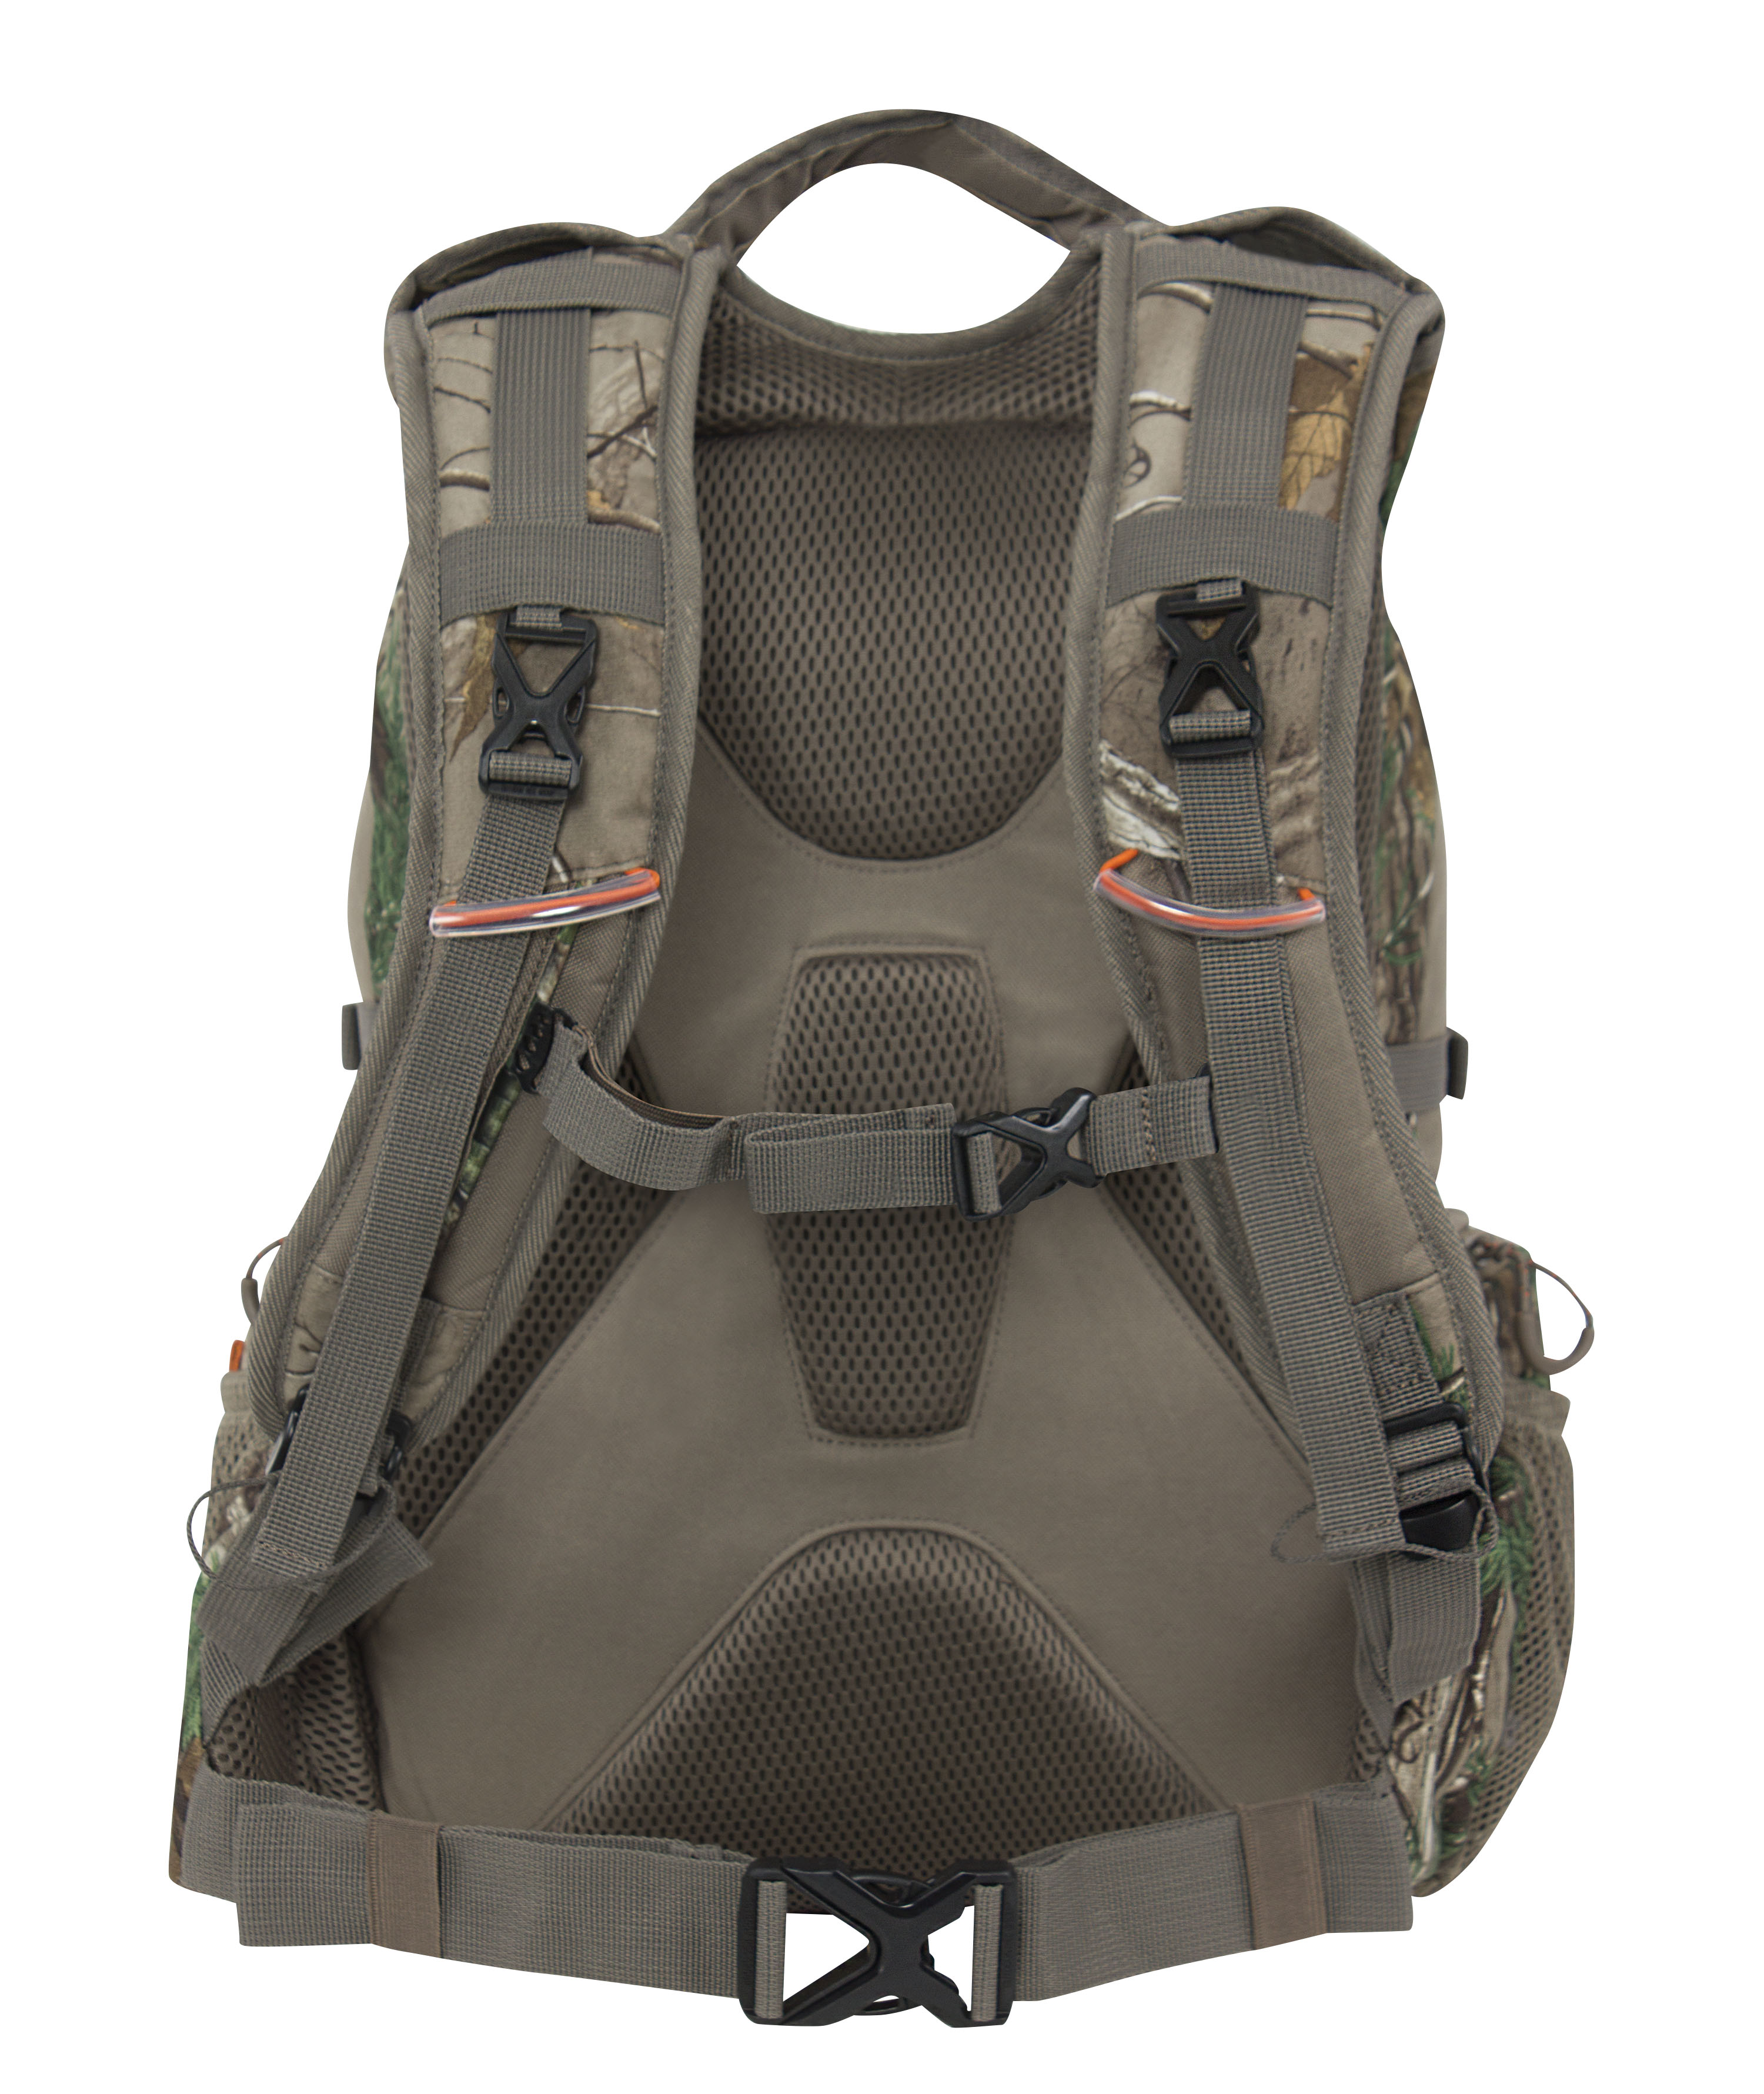 Timberhawk Kodiak 29 L Hunting Backpack, Realtree Xtra Camouflage, Unisex, Green - image 2 of 6